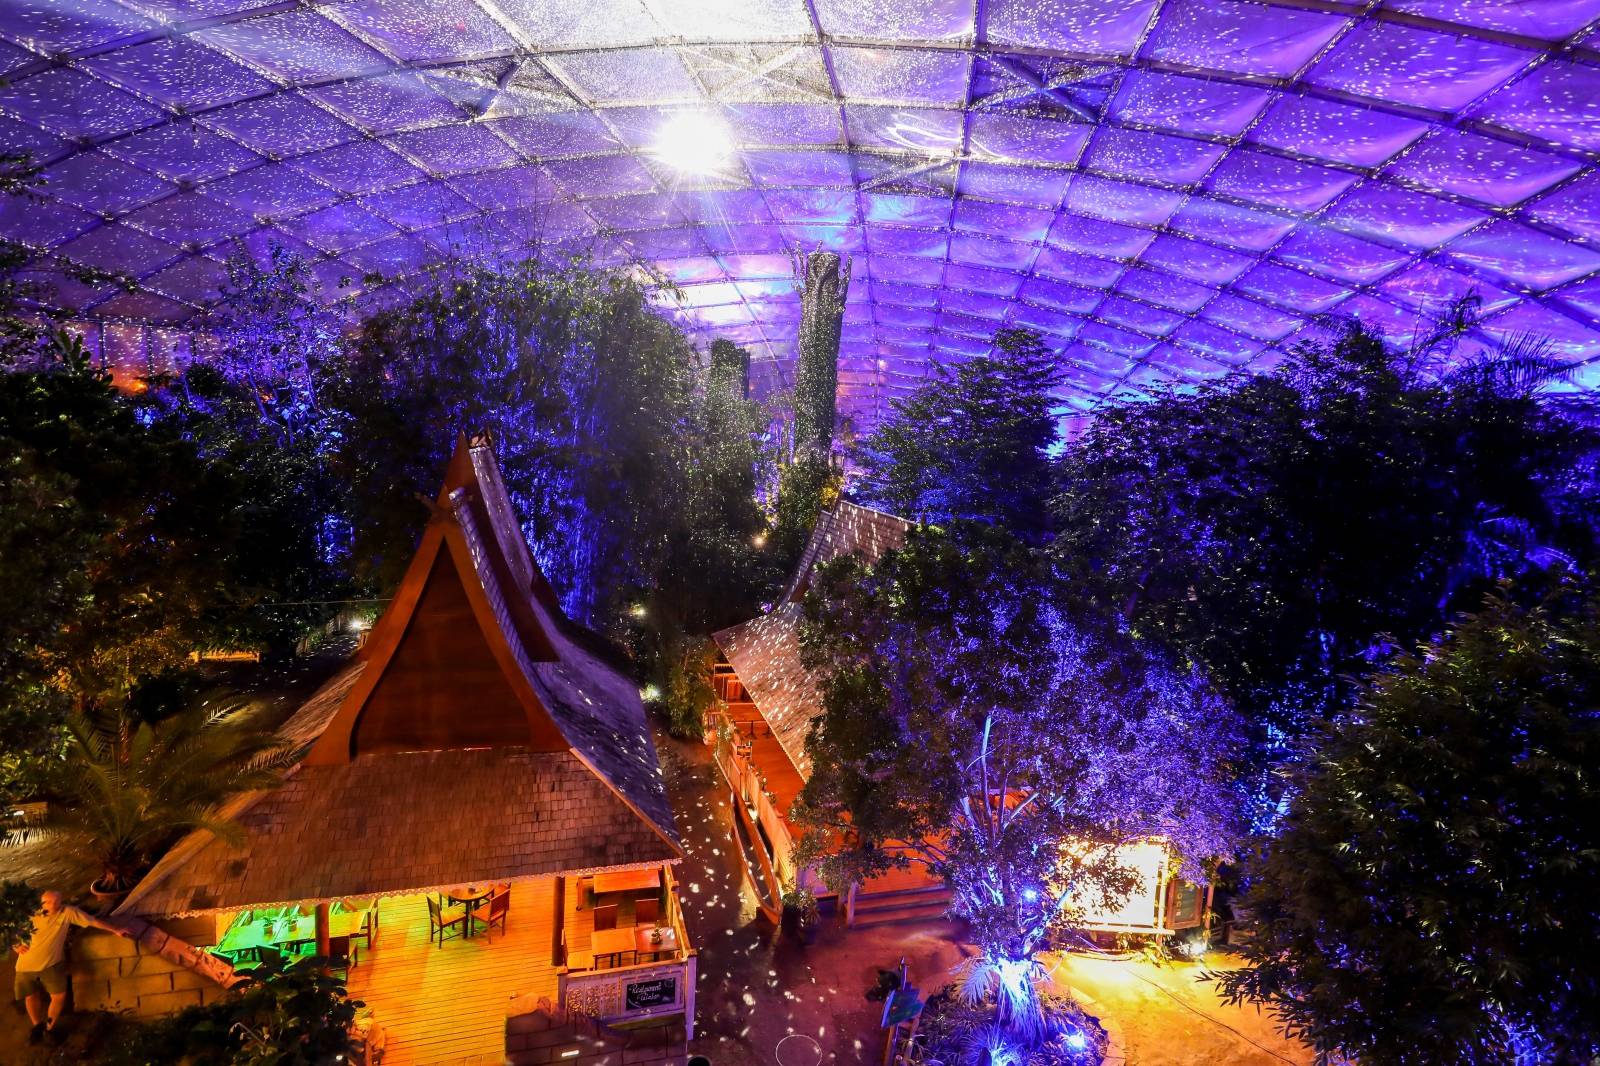 "Magic Tropical Lights" at Gondwanaland Leipzig